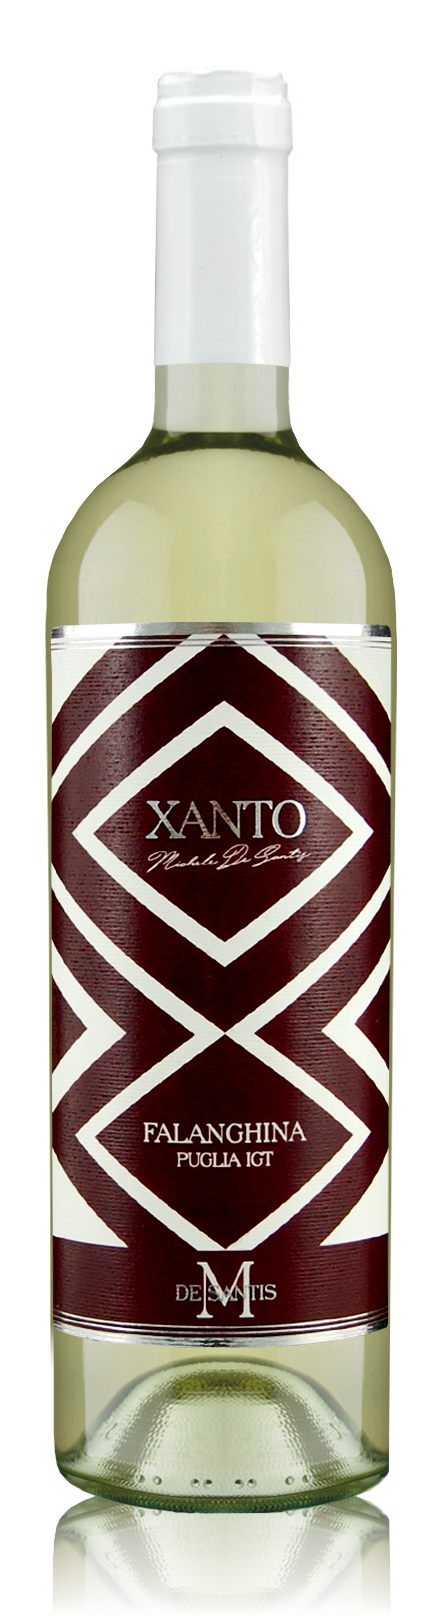 vin blanc Falanghina xanto